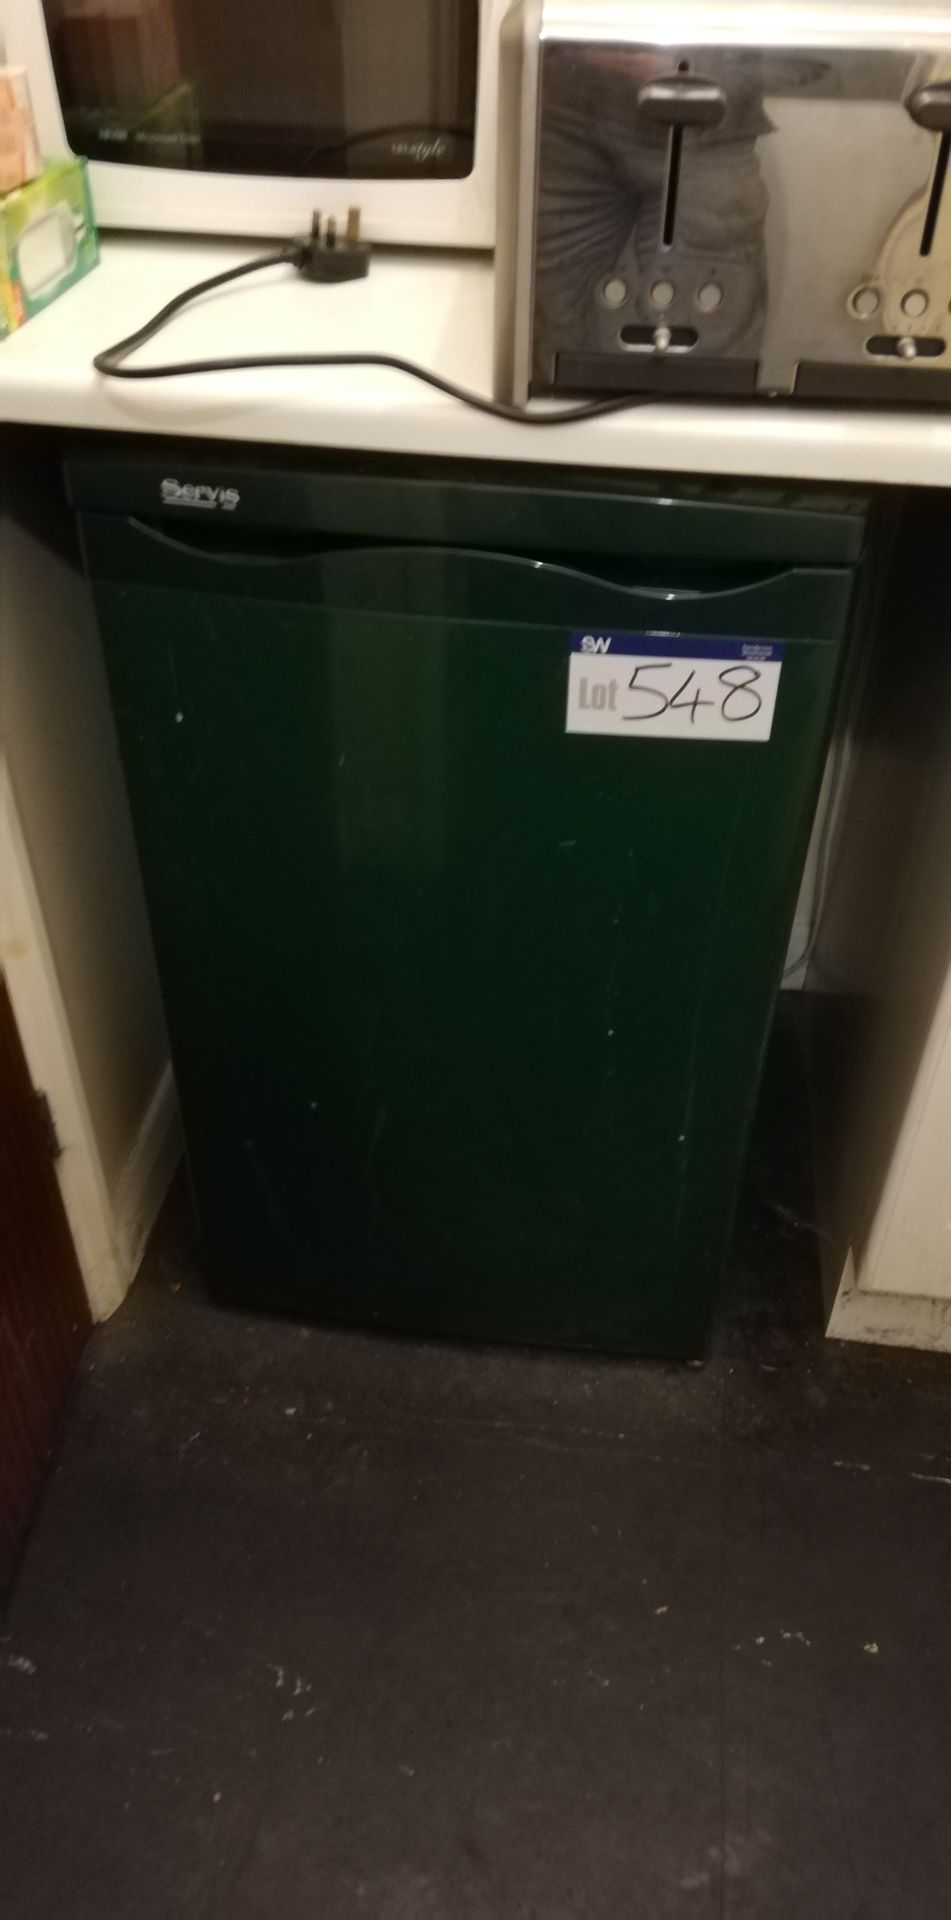 Servis Refrigerator